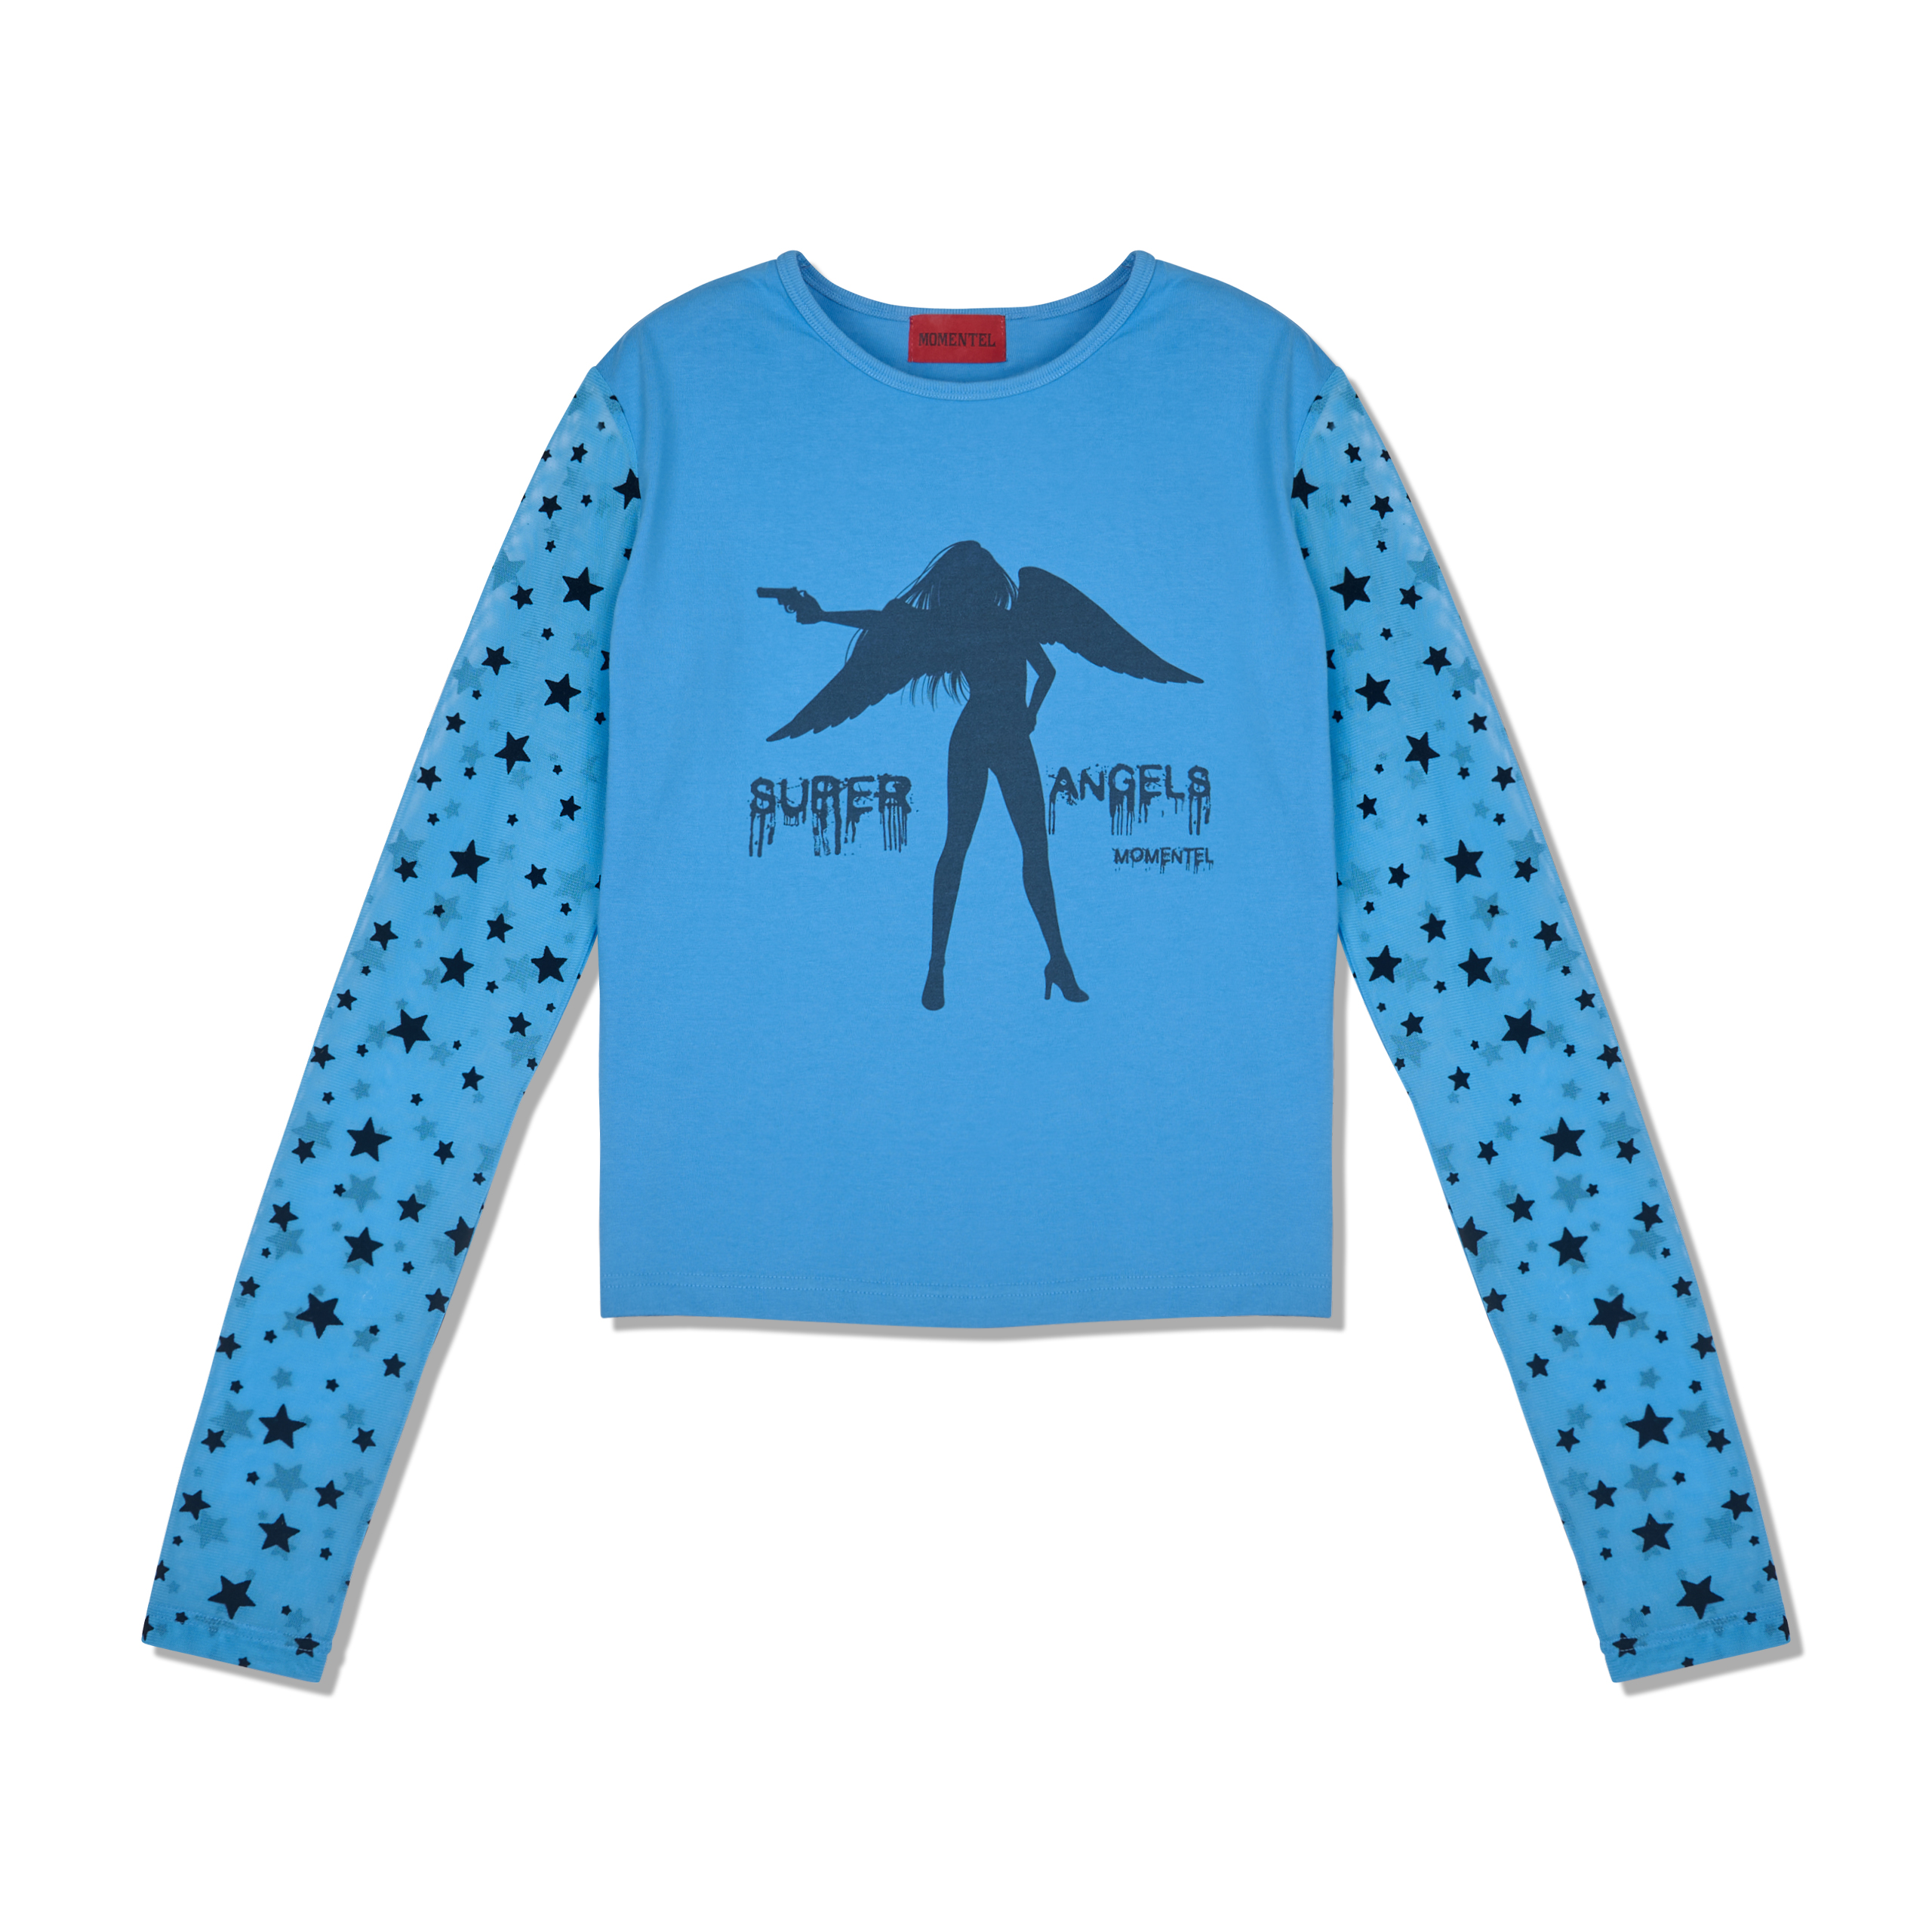 Super Angels Star Mesh T-Shirt (Blue)